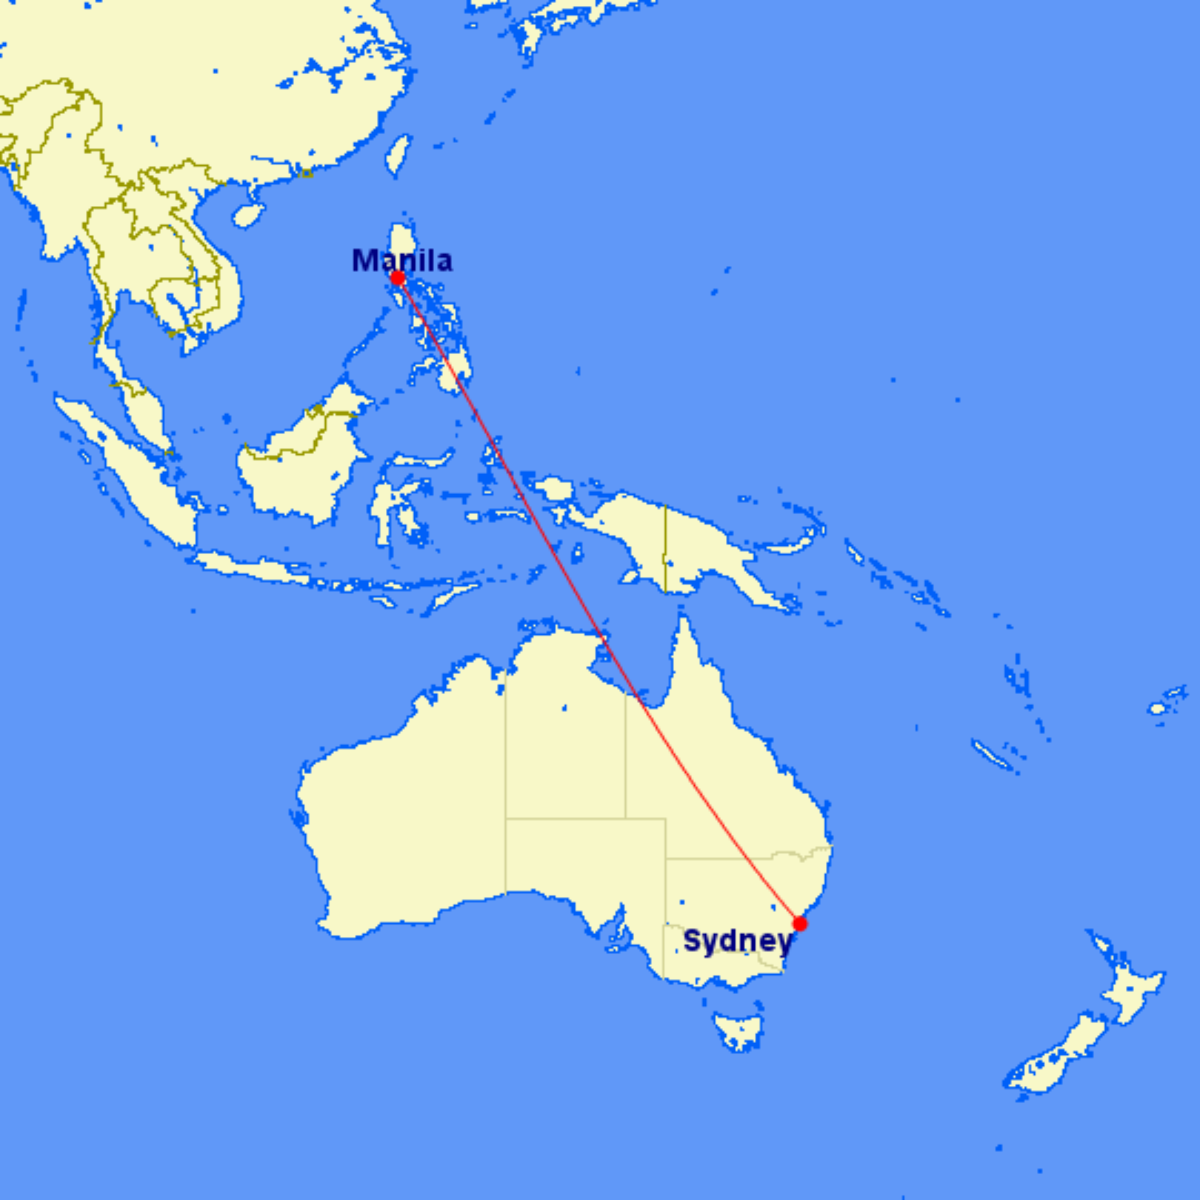 Sydney-Manila Route Map